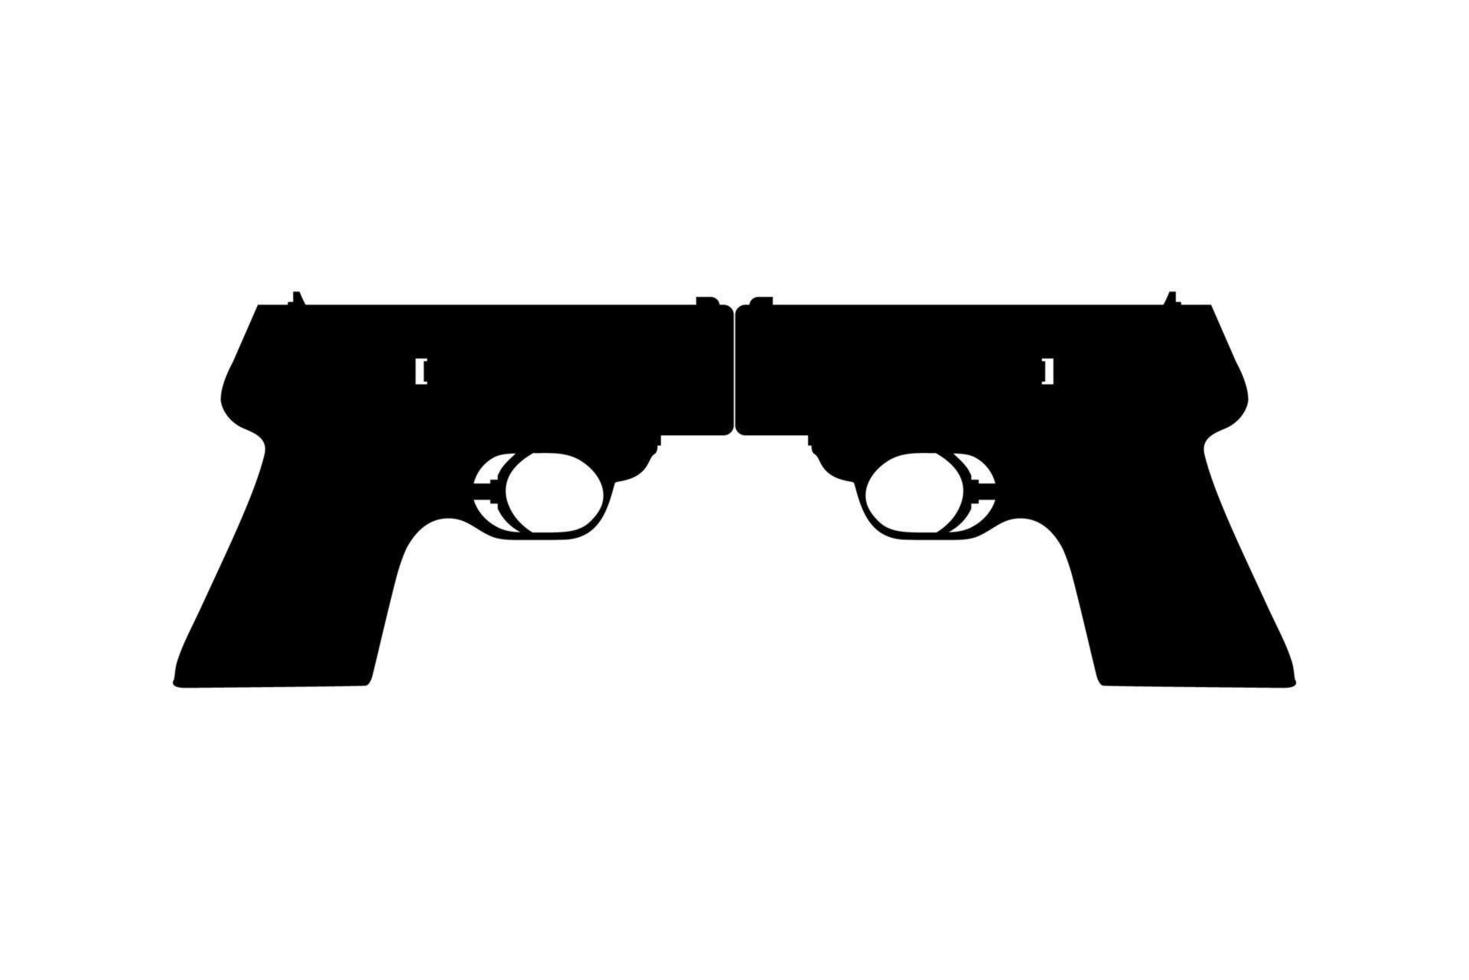 pistola de silueta o pistola de pistola para ilustración de arte, logotipo, pictograma, sitio web o elemento de diseño gráfico. ilustración vectorial vector